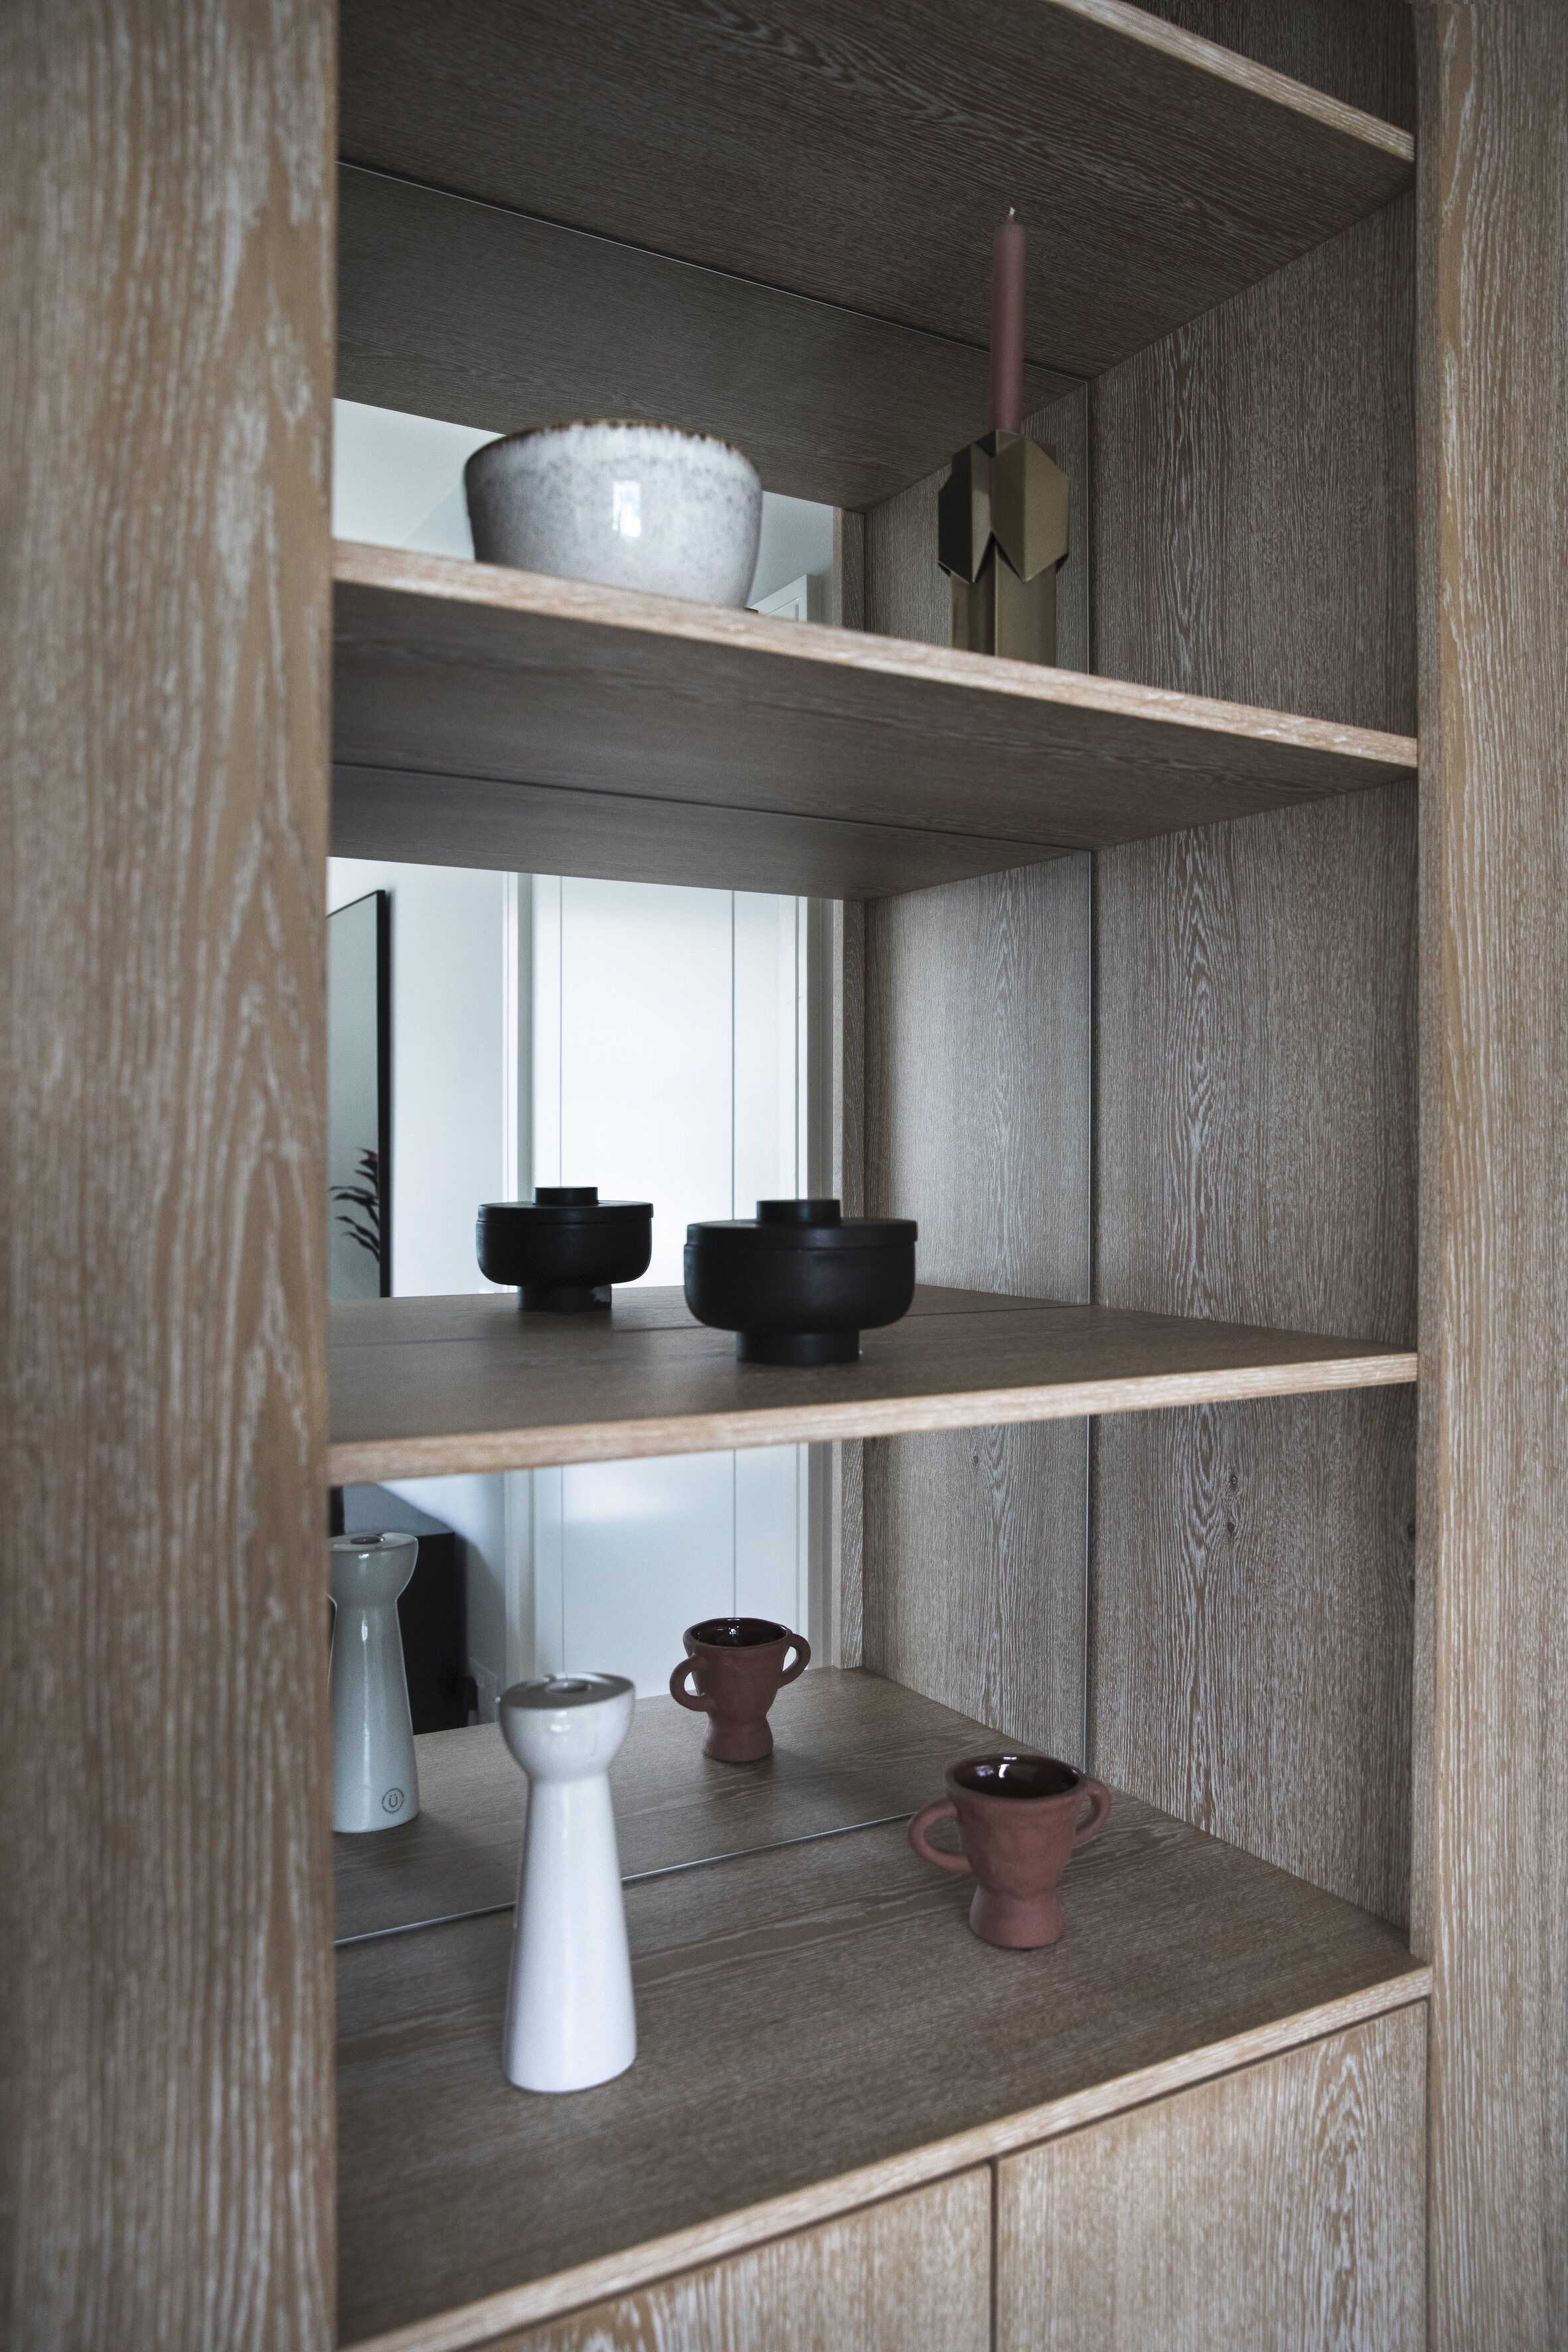 mirror backed wooden shelves